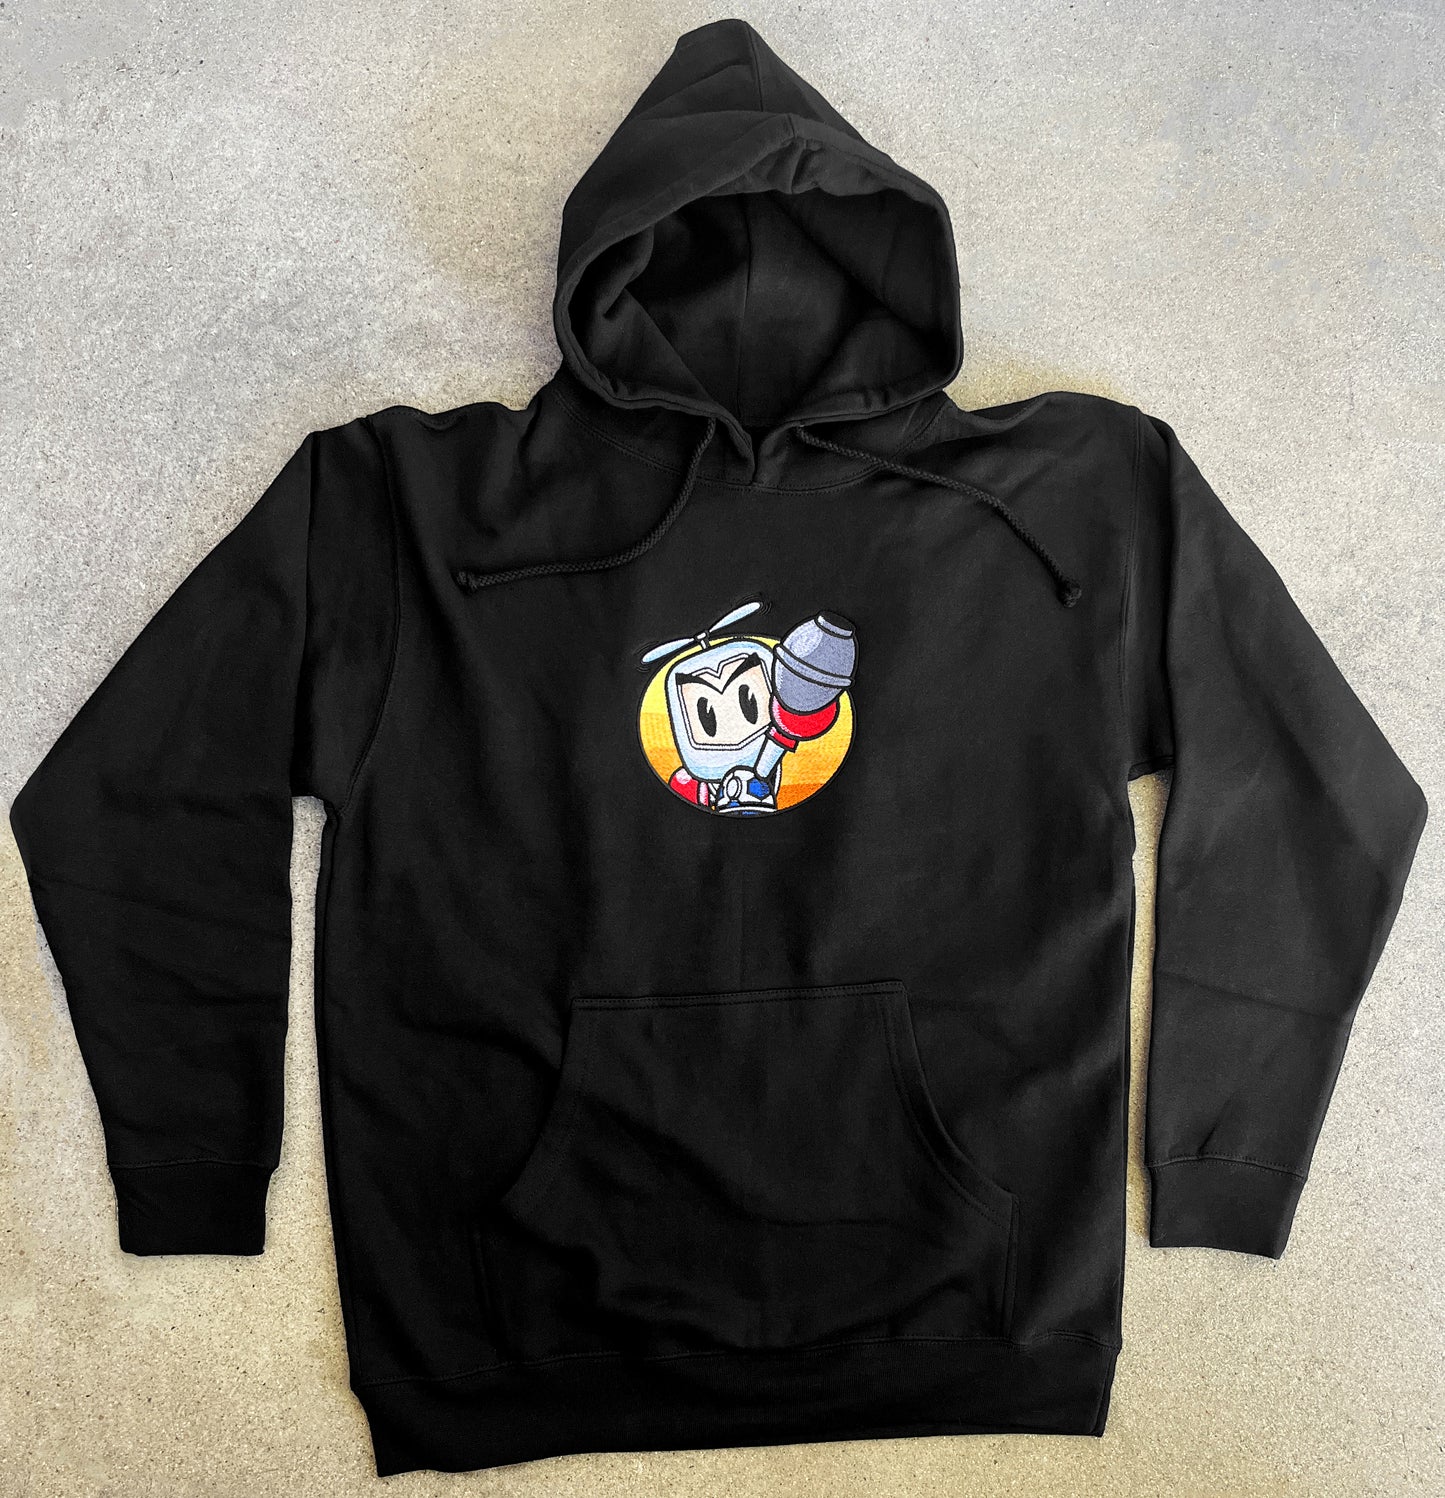 grenade man embroidered hooded sweatshirt 71,000 stitches - BLACK